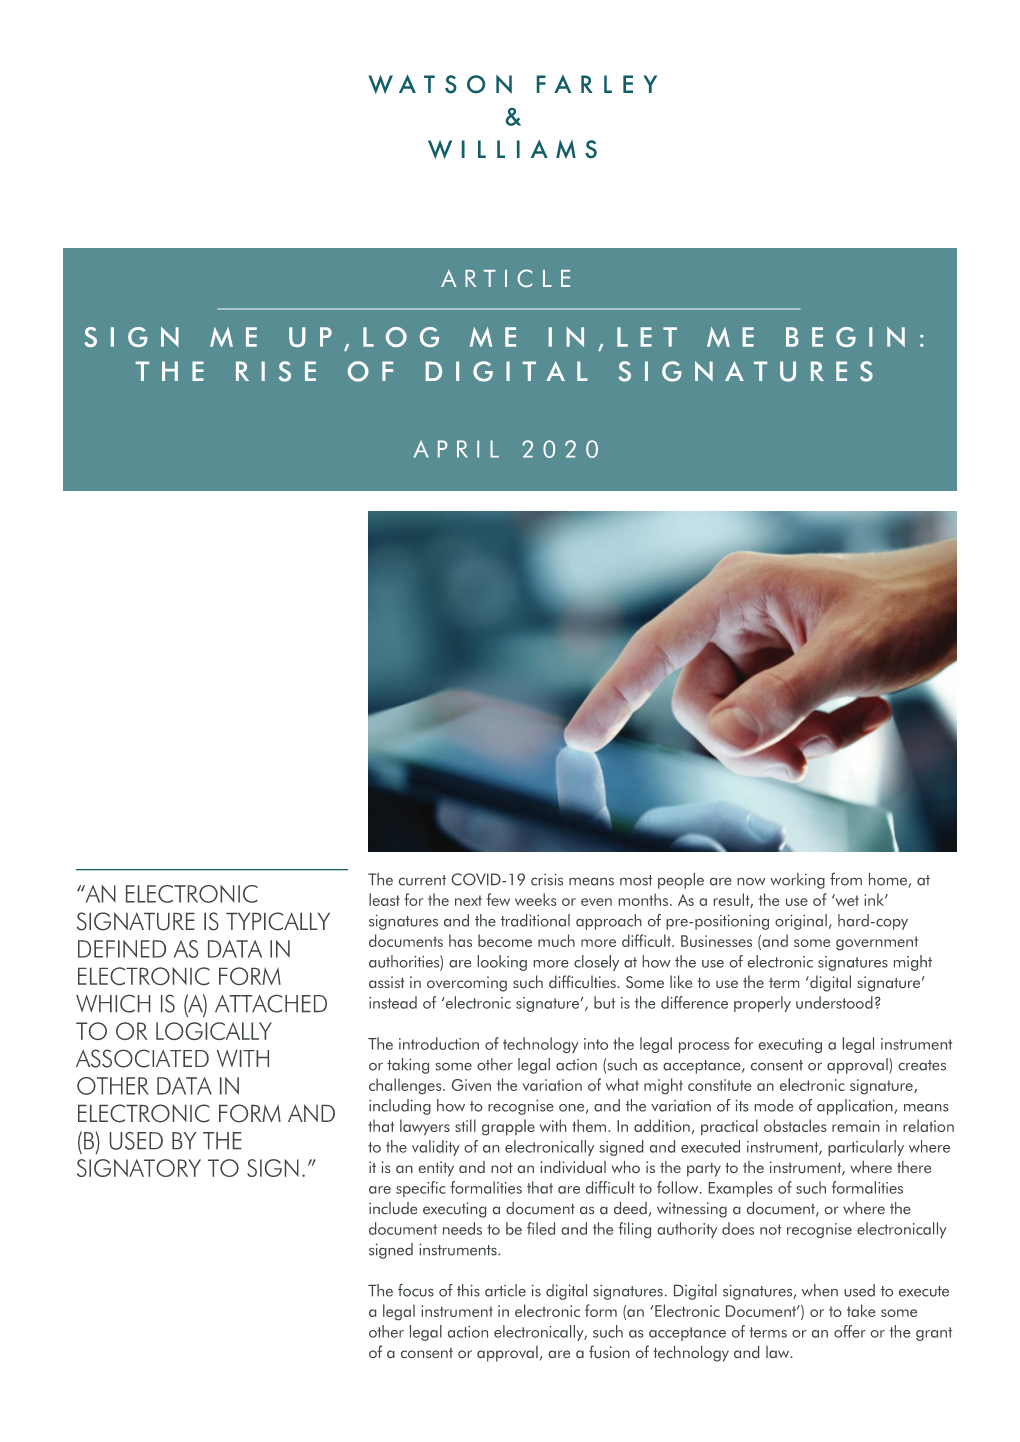 The Rise of Digital Signatures